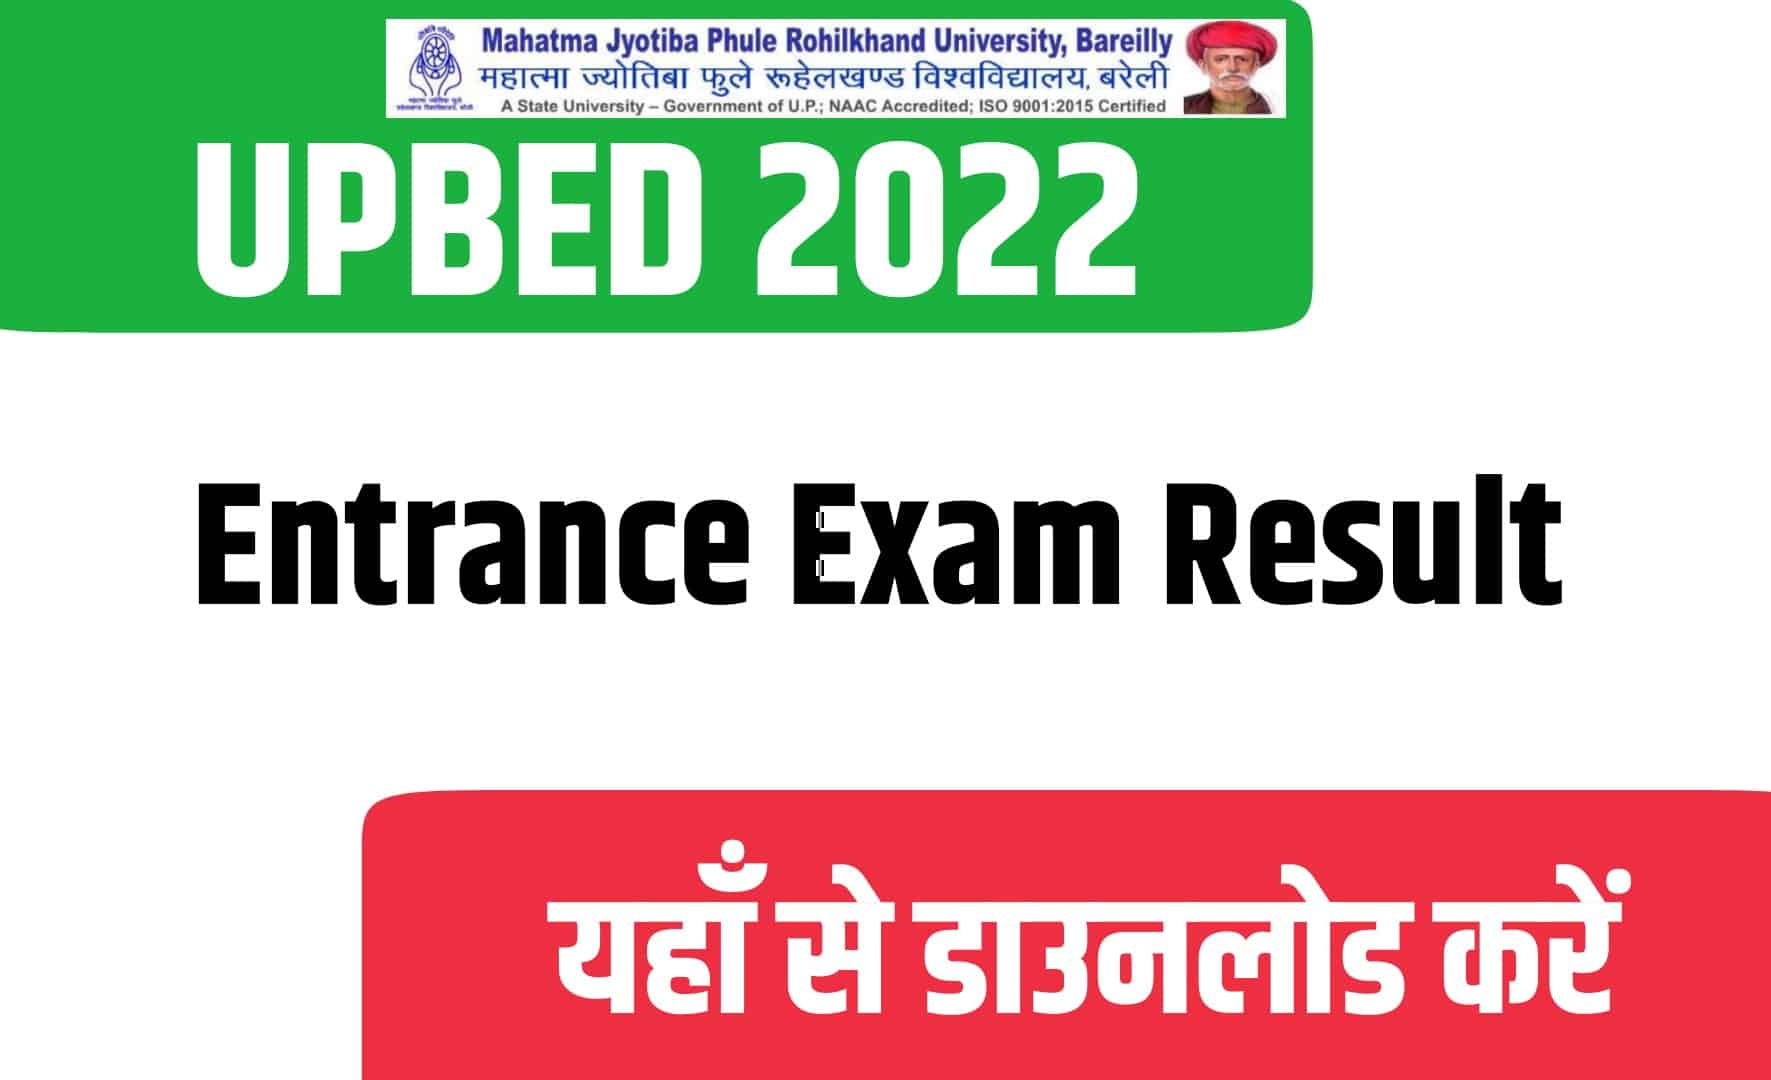 UPBED 2022 Entrance Exam Result